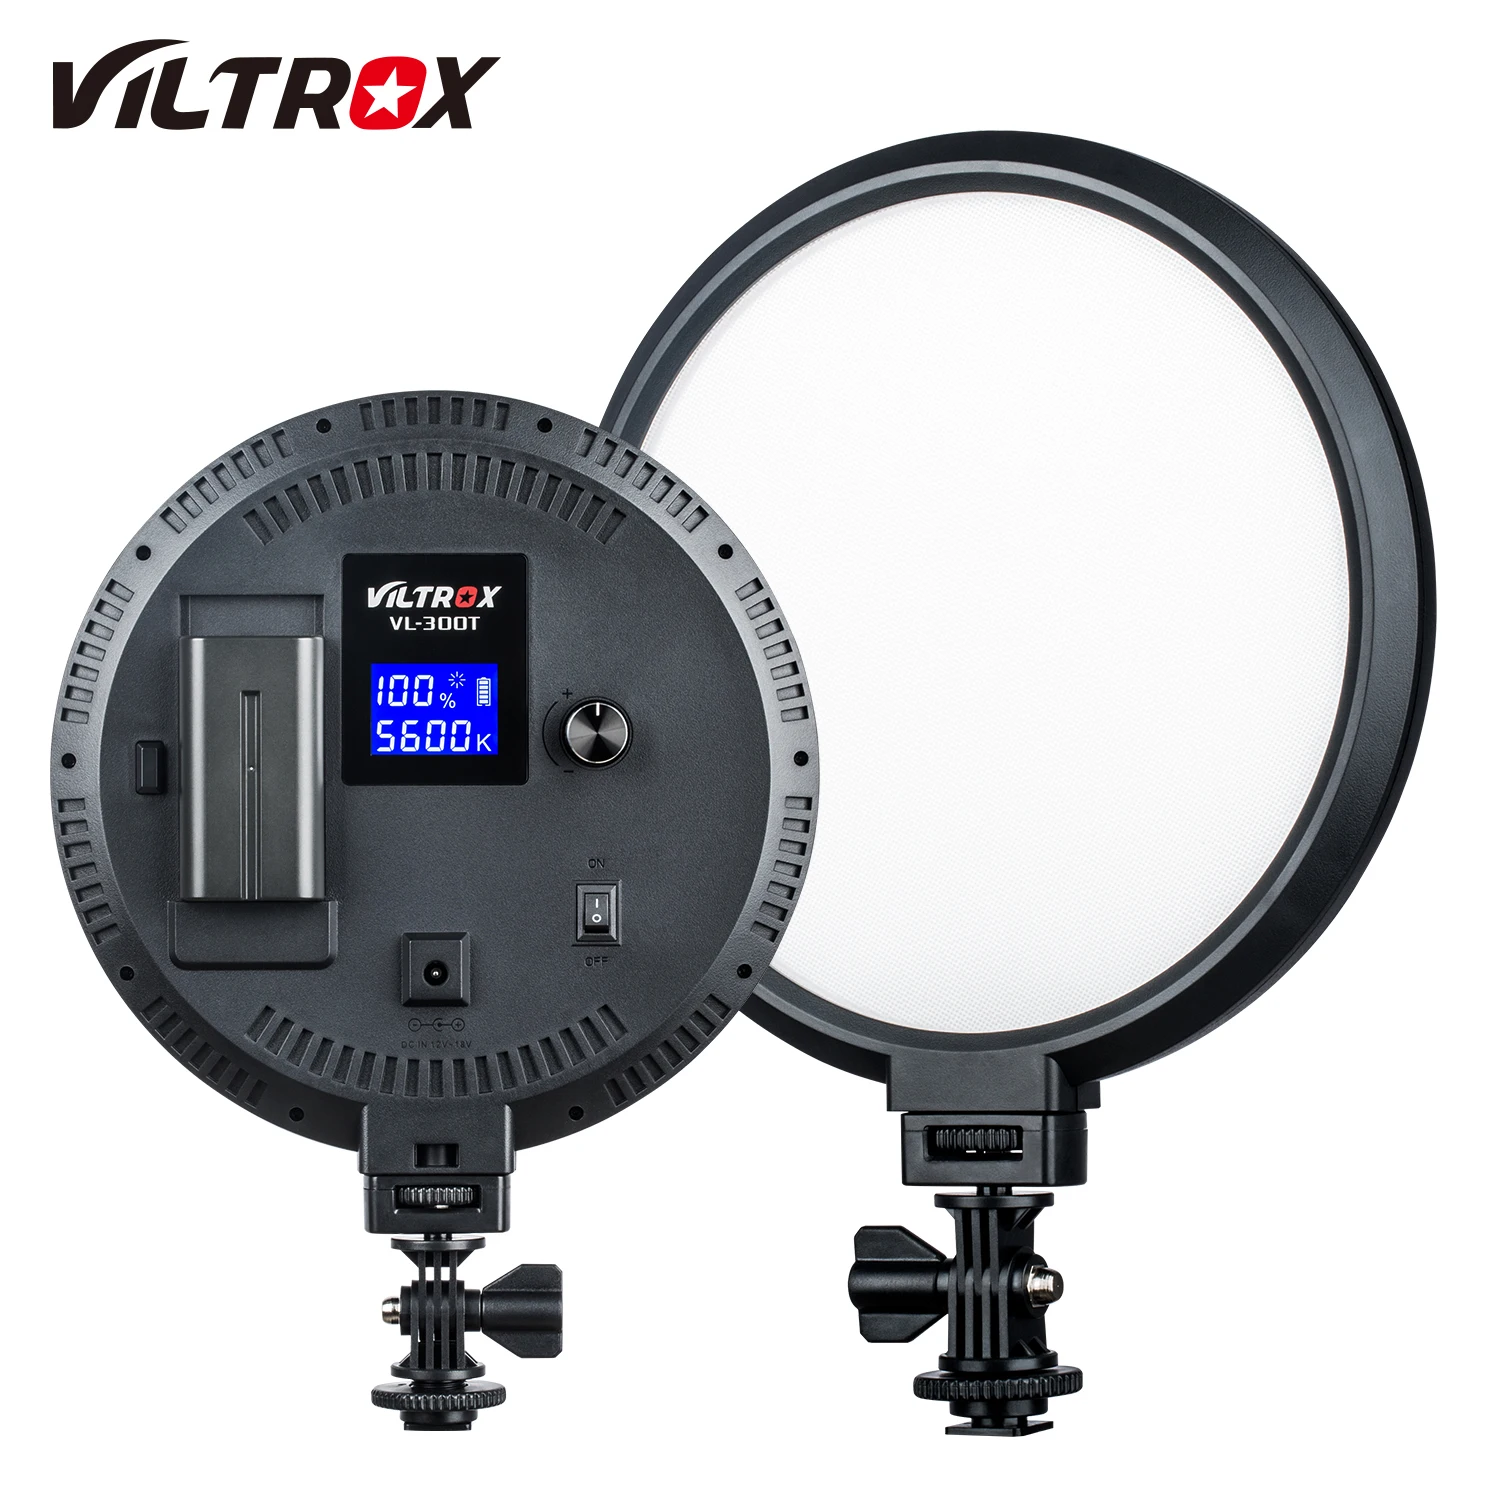 

Viltrox VL-300T 18W LED Video Studio Light Lamp Slim 3300K-5500K Dimmable Kit for Camera Photo Shooting YouTube Video Show Live